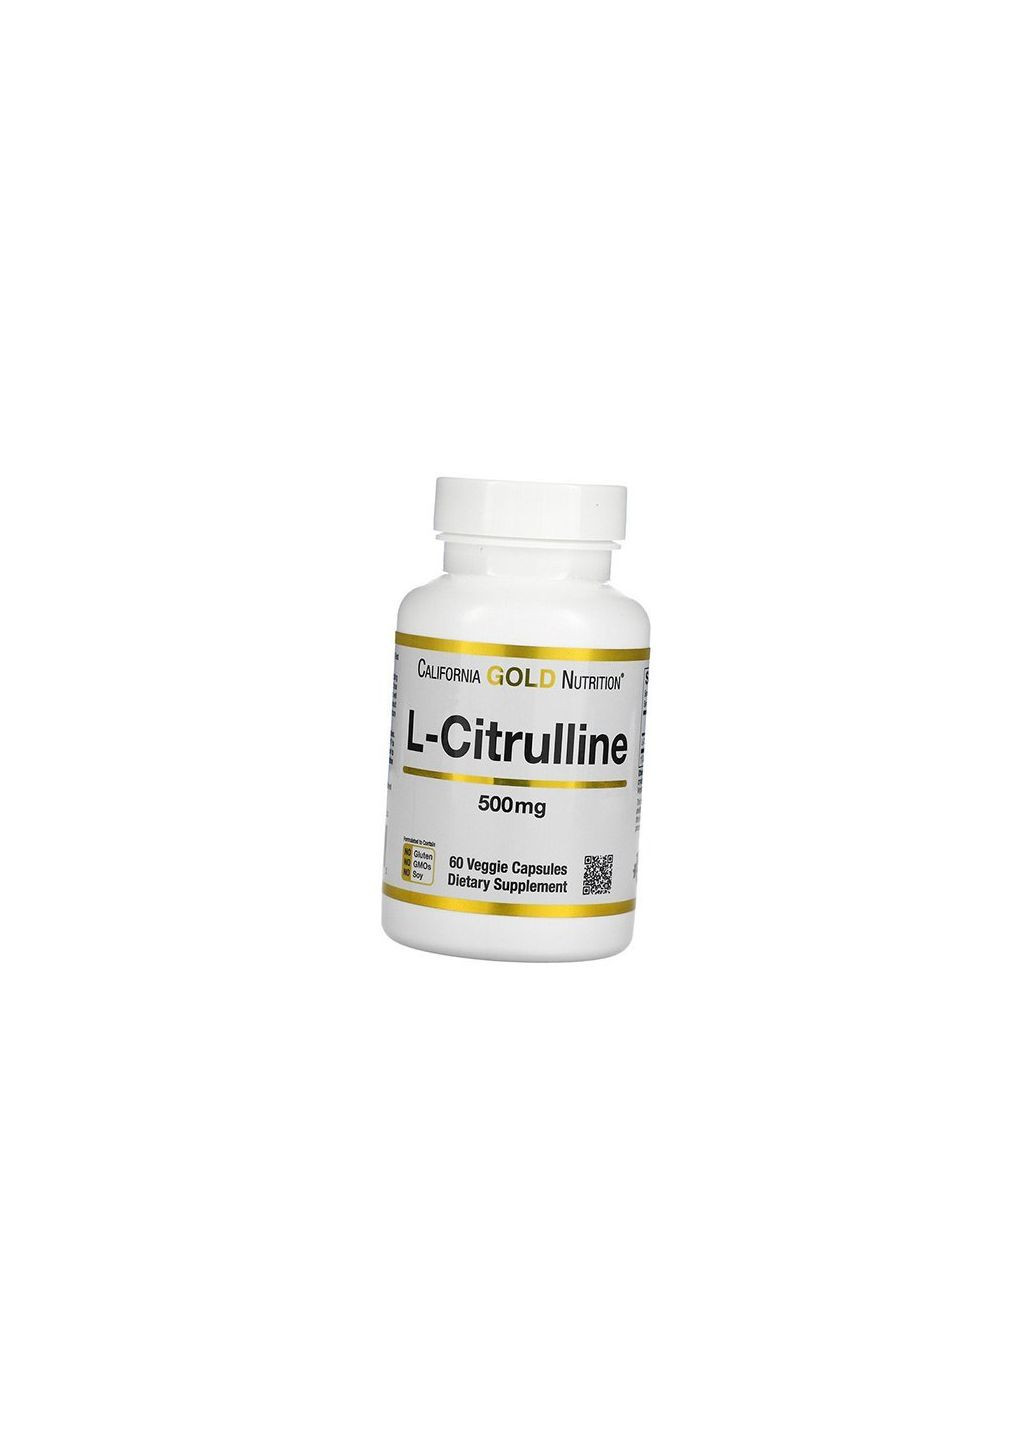 LCitrulline 500 60вегкапс (27427001) California Gold Nutrition (293255249)